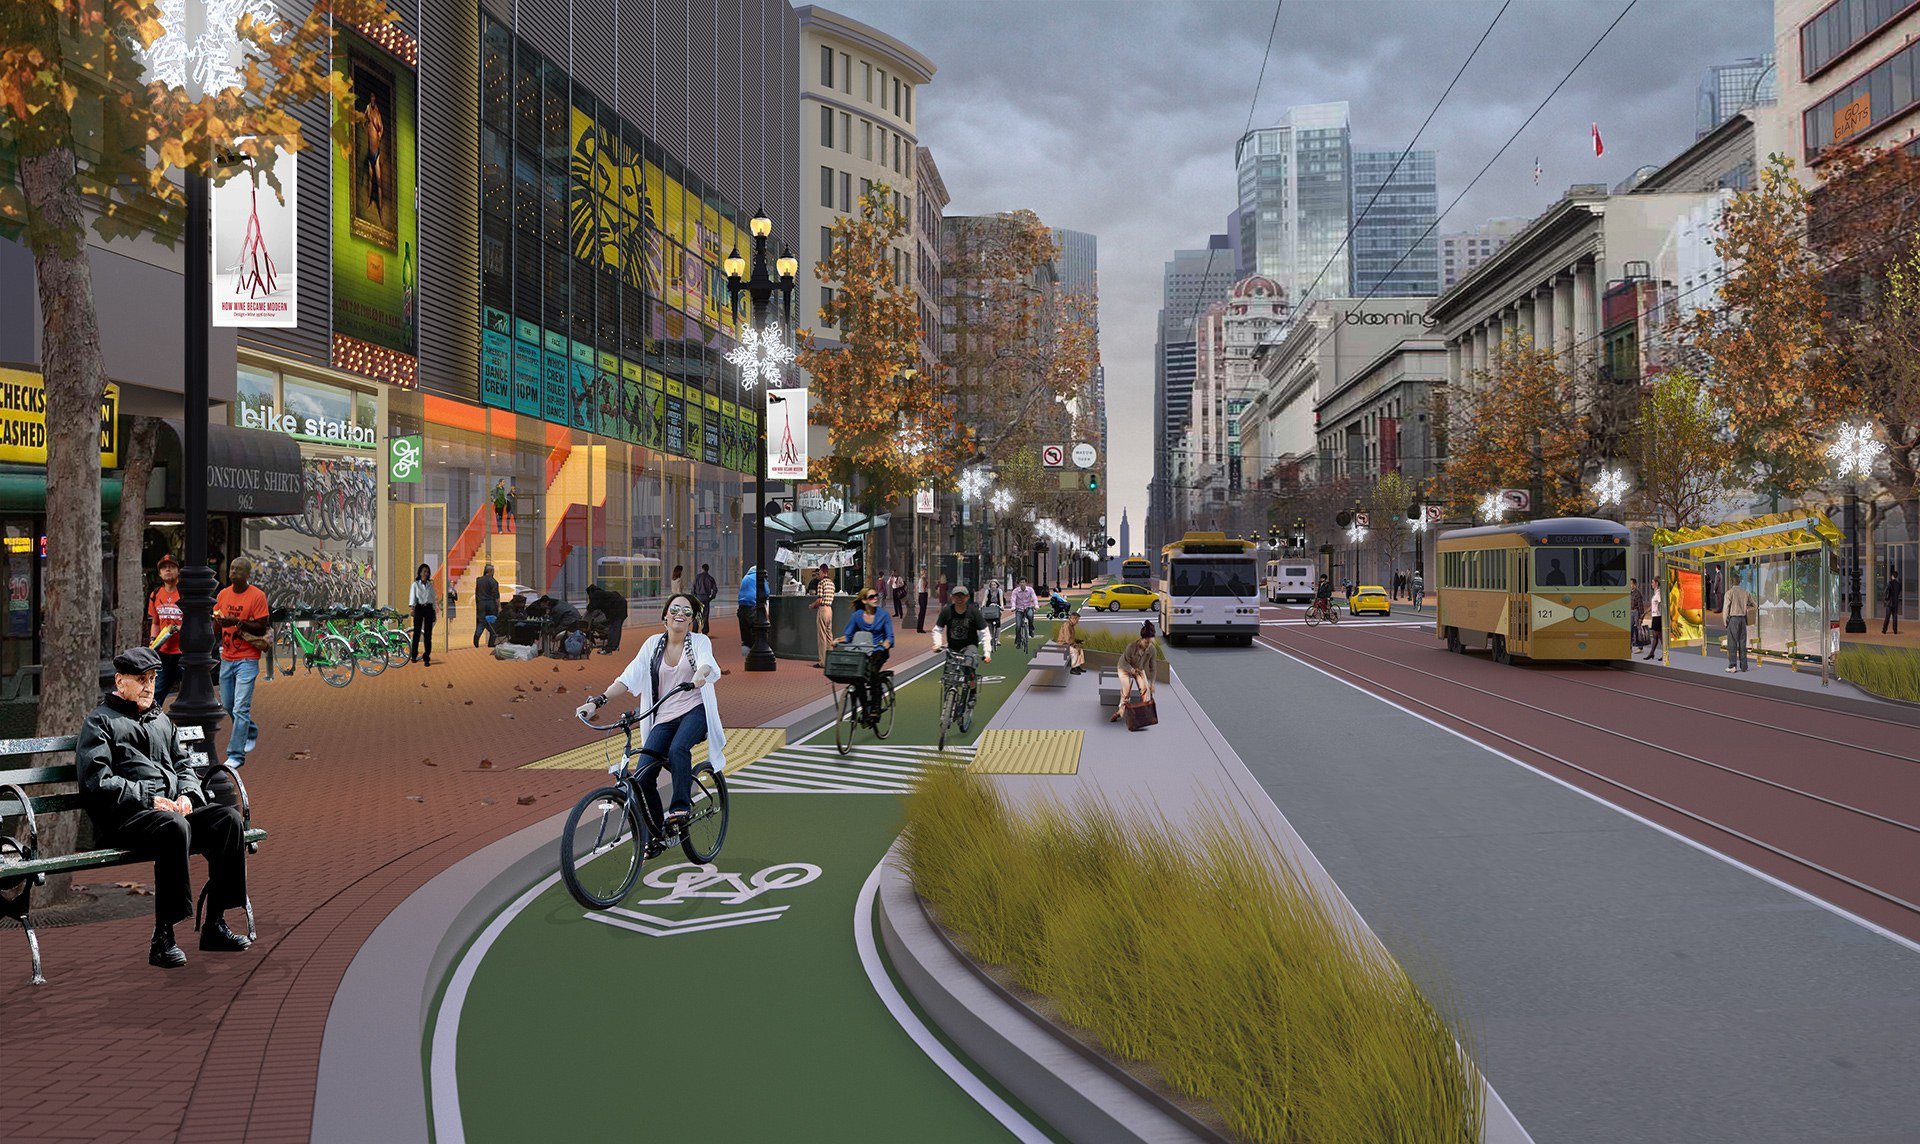 More information about "Η σημασία των προστατευόμενων ποδηλατοδρόμων για την αστική ανάπτυξη"